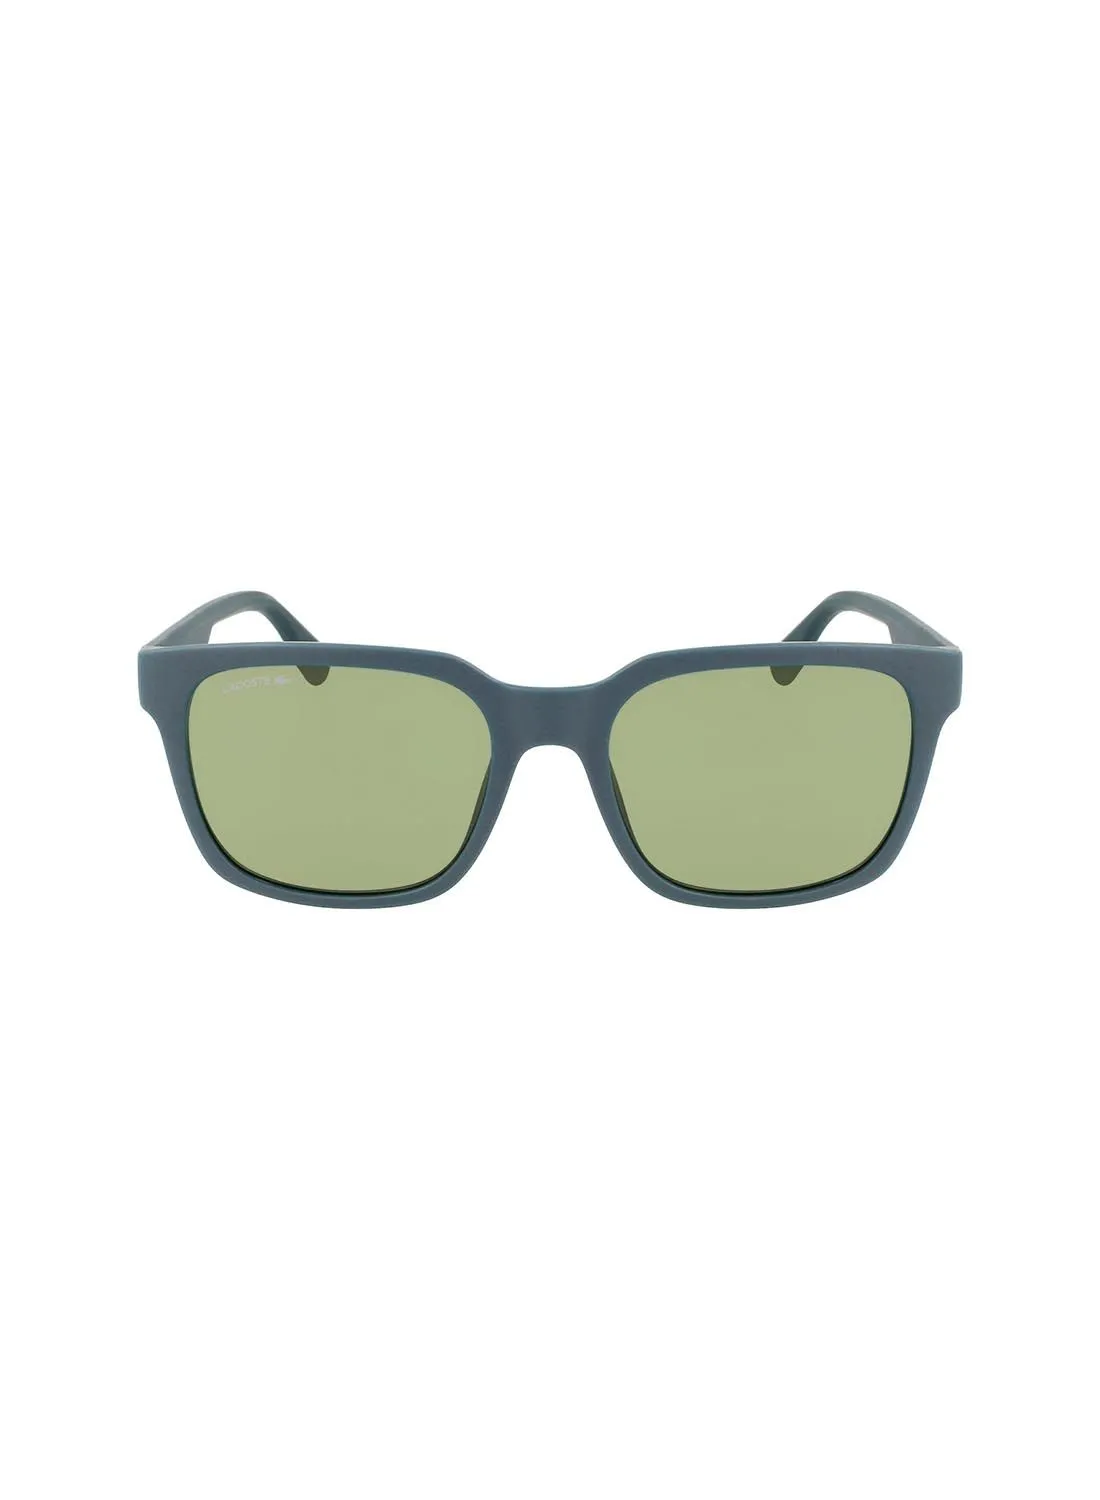 LACOSTE UV Rays Protection Eyewear Sunglasses L967S-401-5519